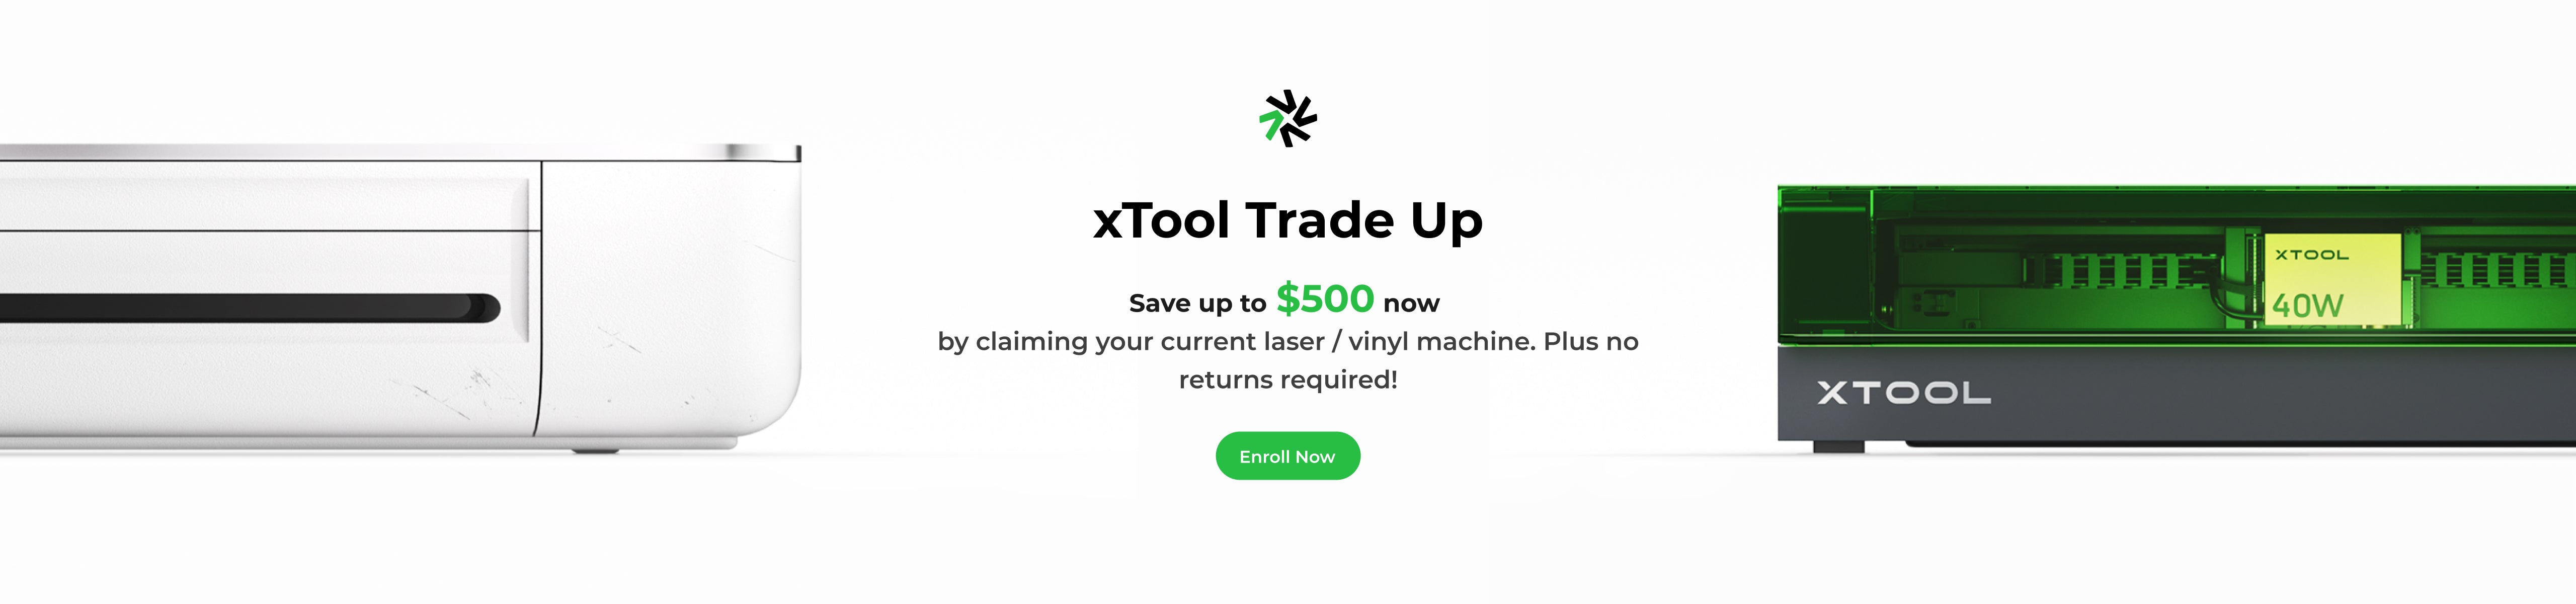 xTool Trade Up